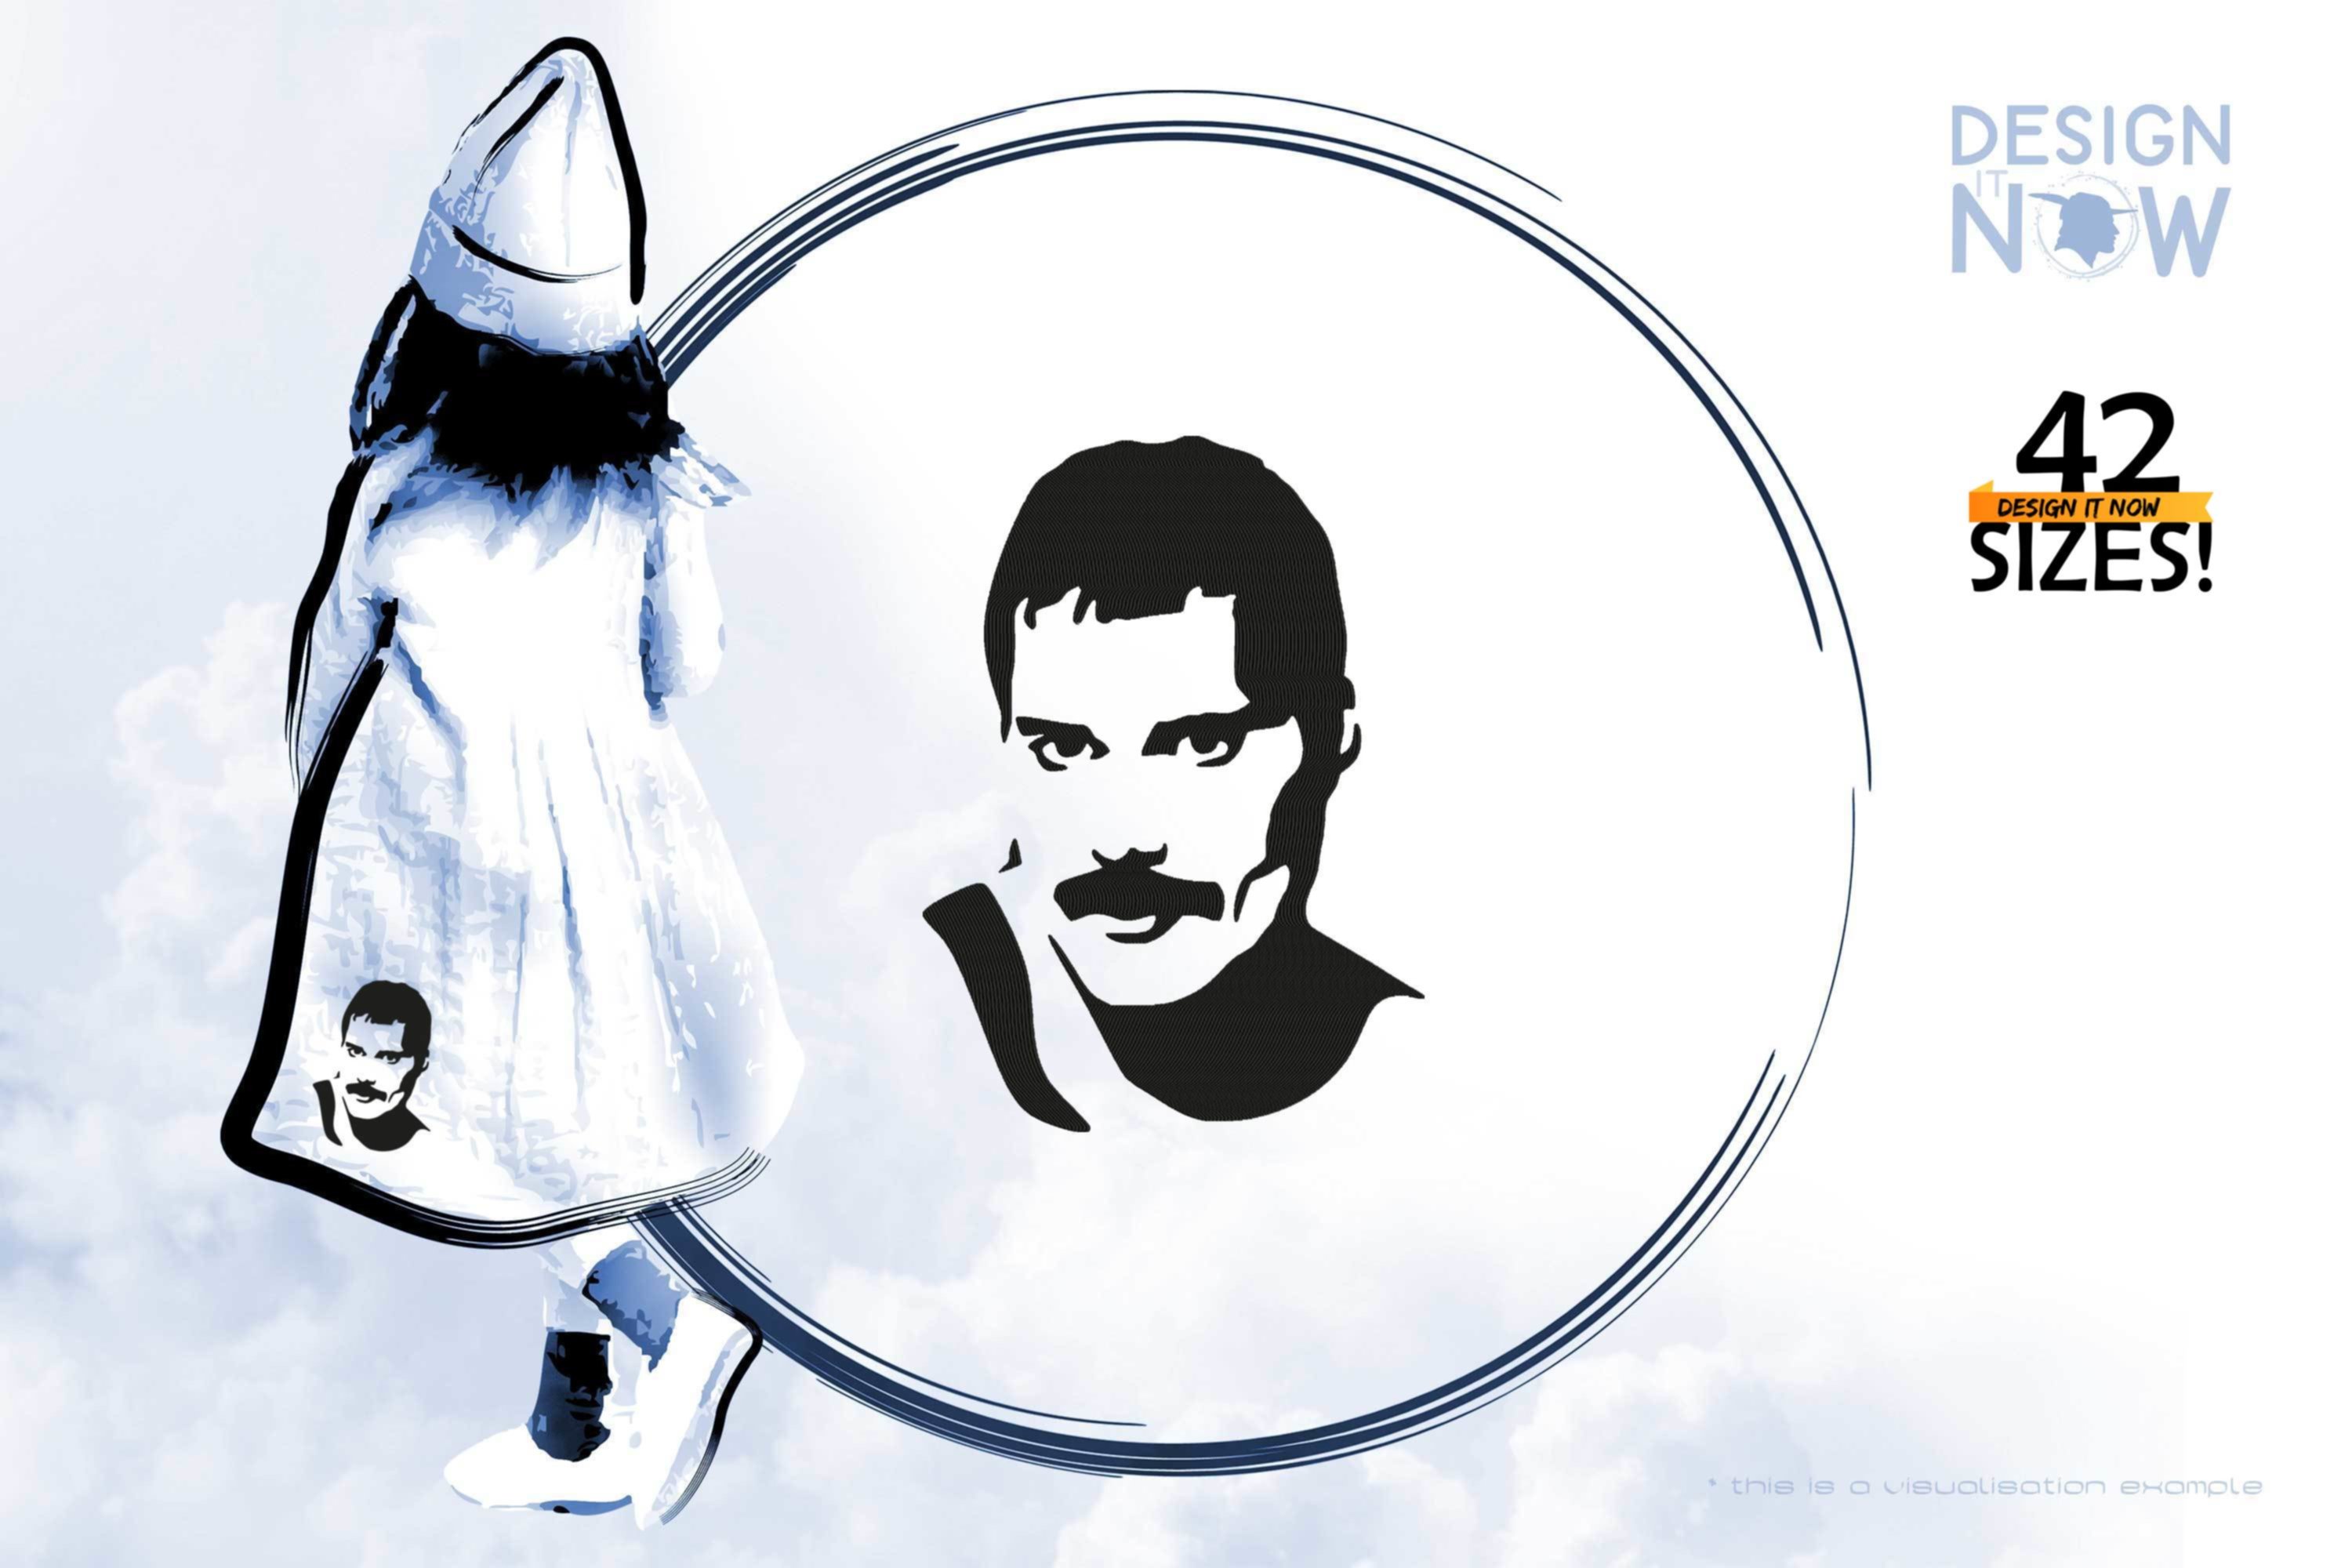 Tribute To Musician Farrokh Bulsara aka Freddie Mercury I